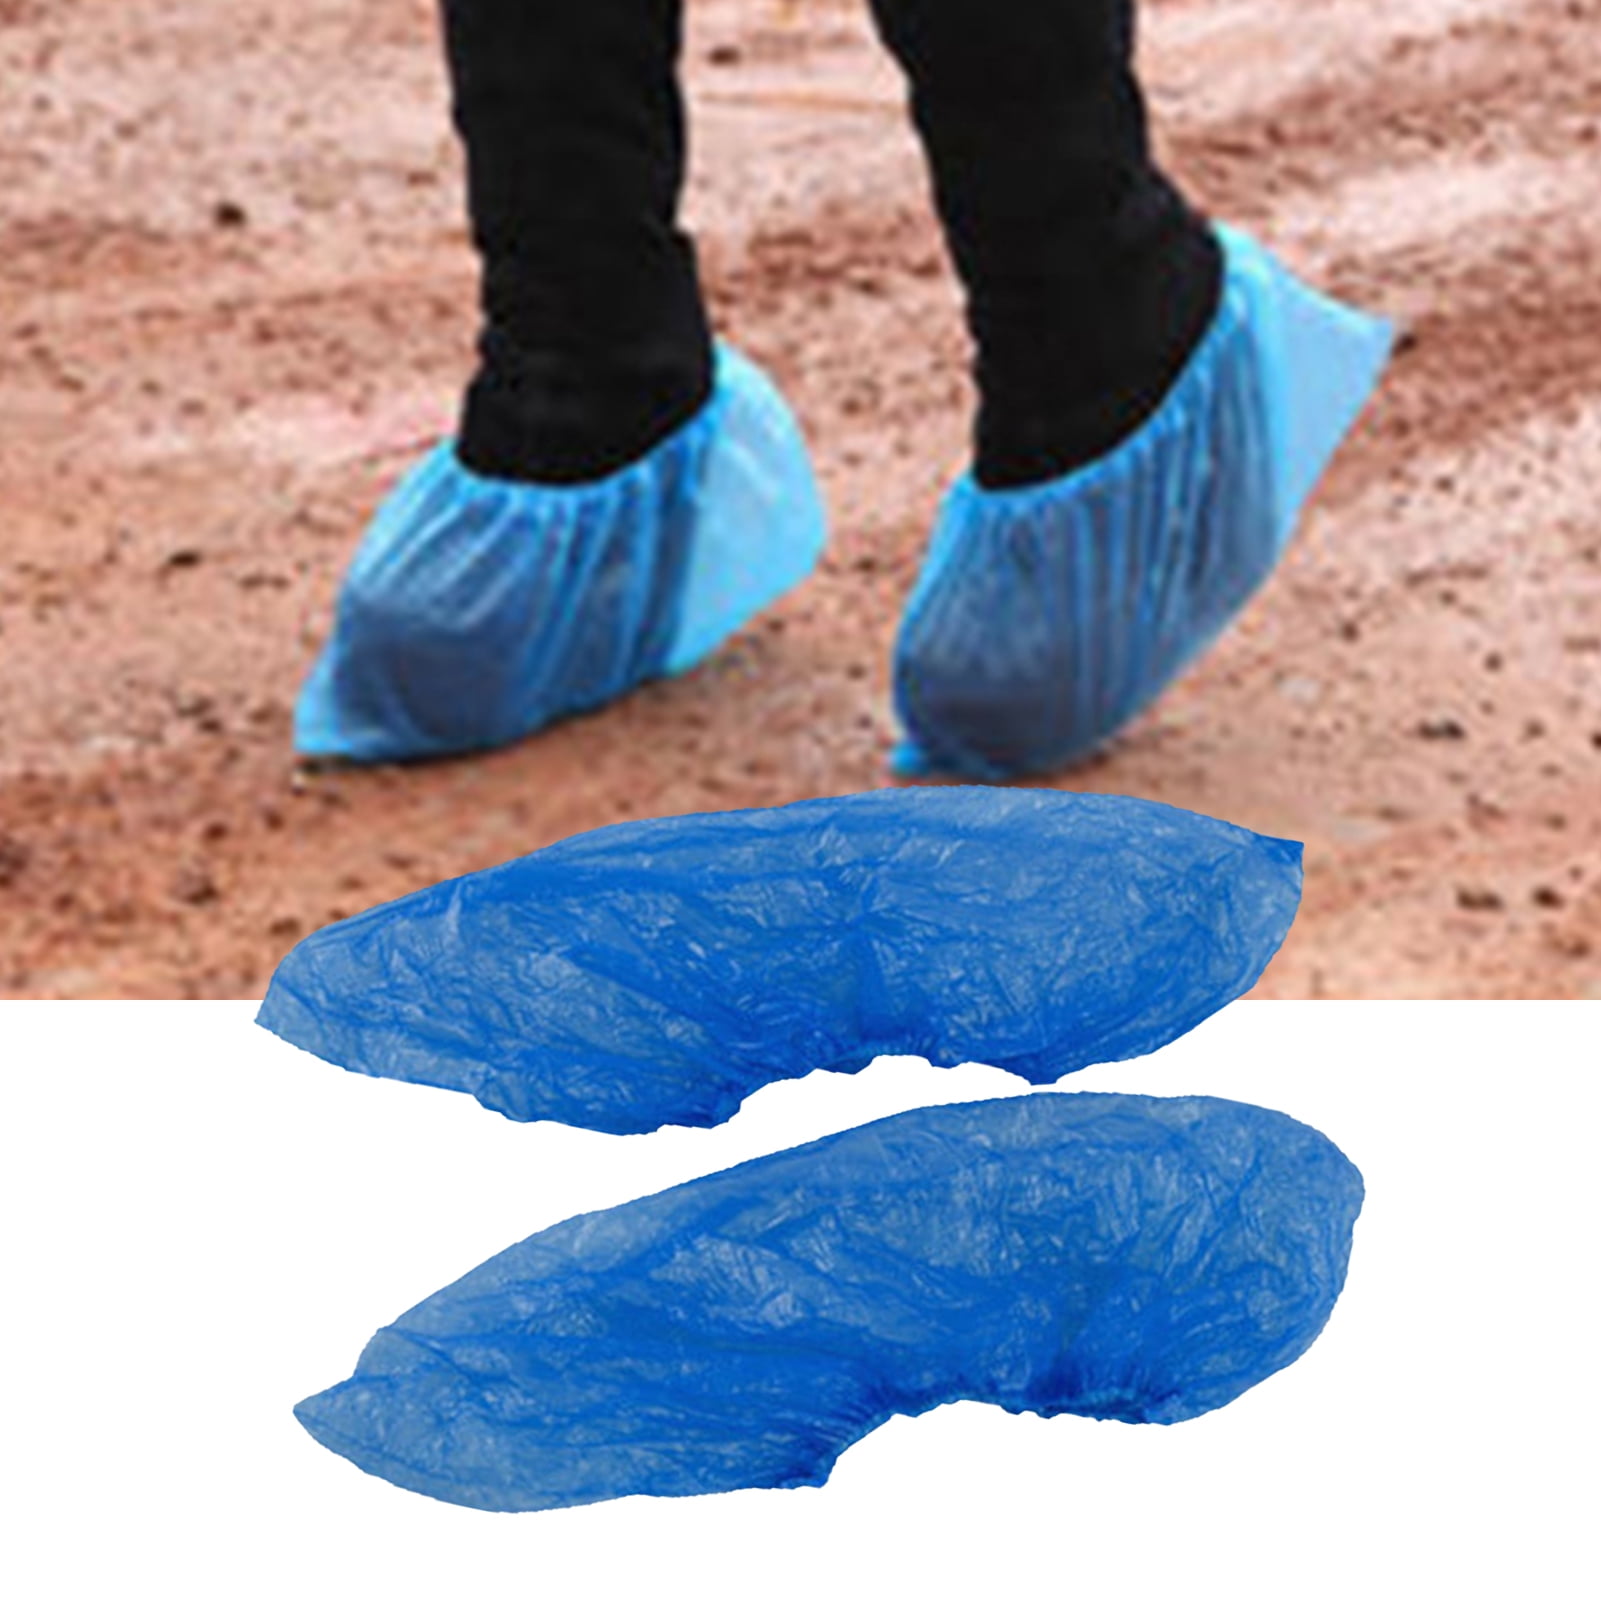 100PCS Blue Foot Shoes Cover Dustproof Plastic Disposable Floor Protector 